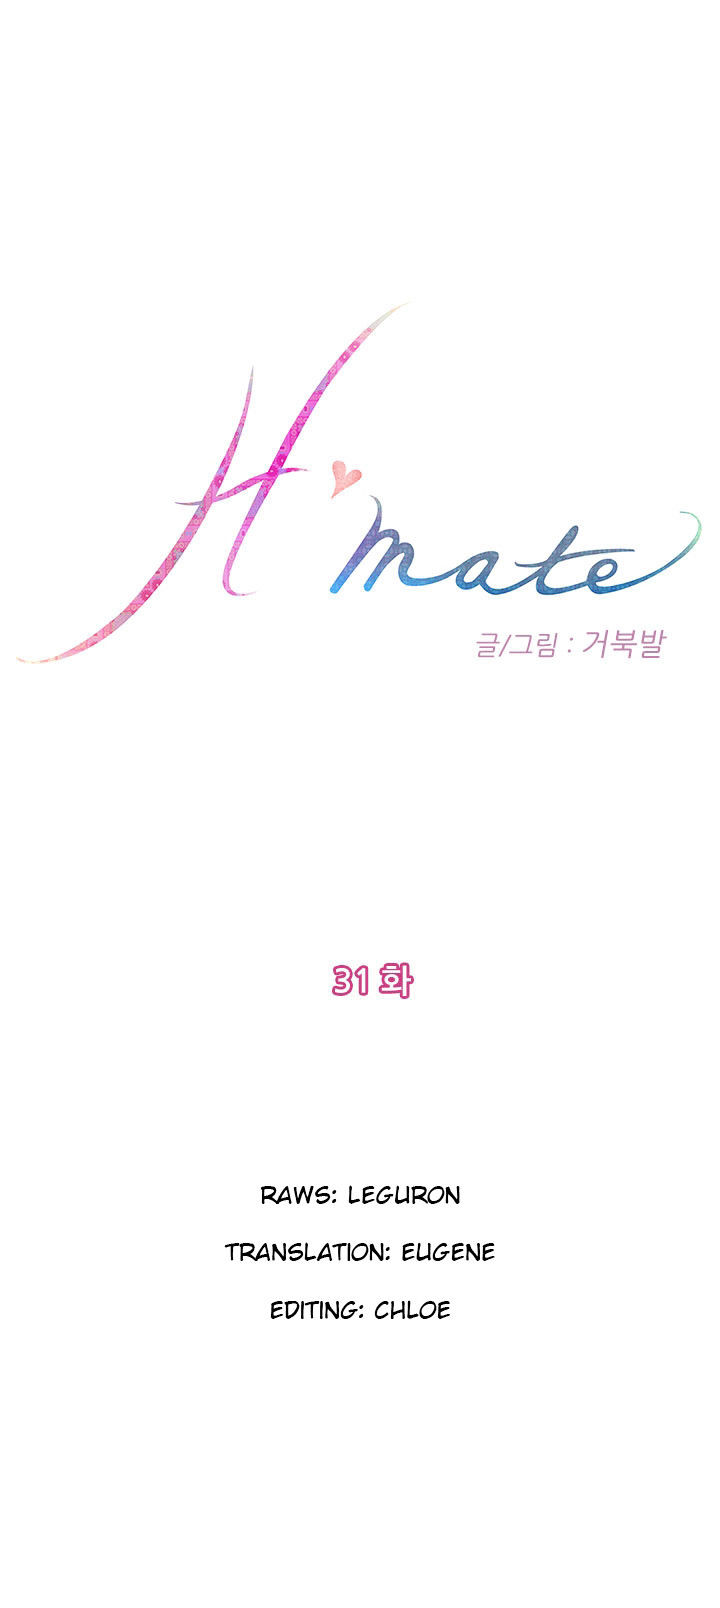 Mangás H-Mate novo Chapter 31 ✯ unionmanga.xyz ✓ Hメイト (Japanese); H메이트  (Korean) Chapter 31